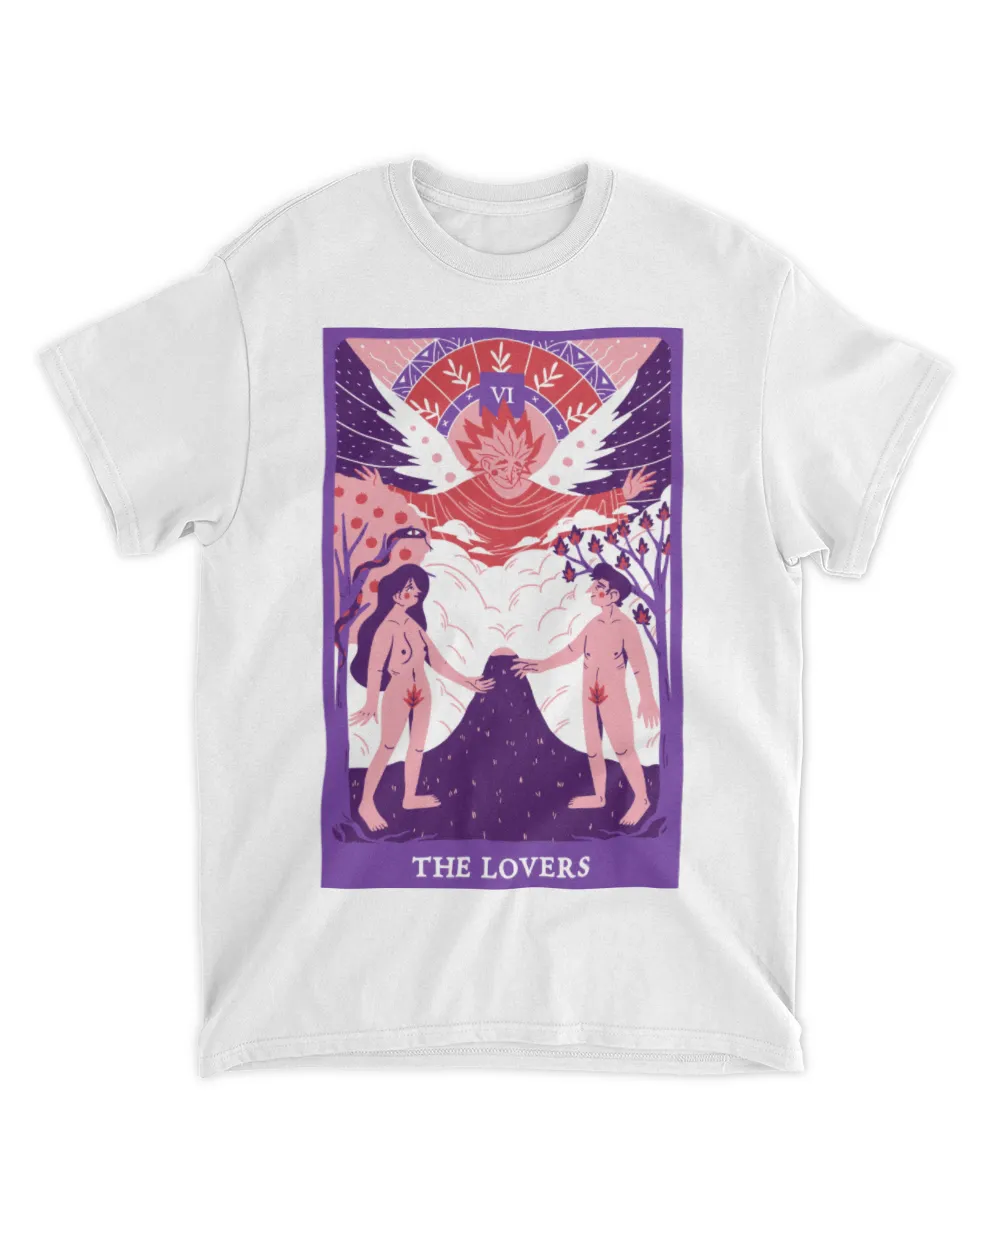 Tarot card the lovers shirt